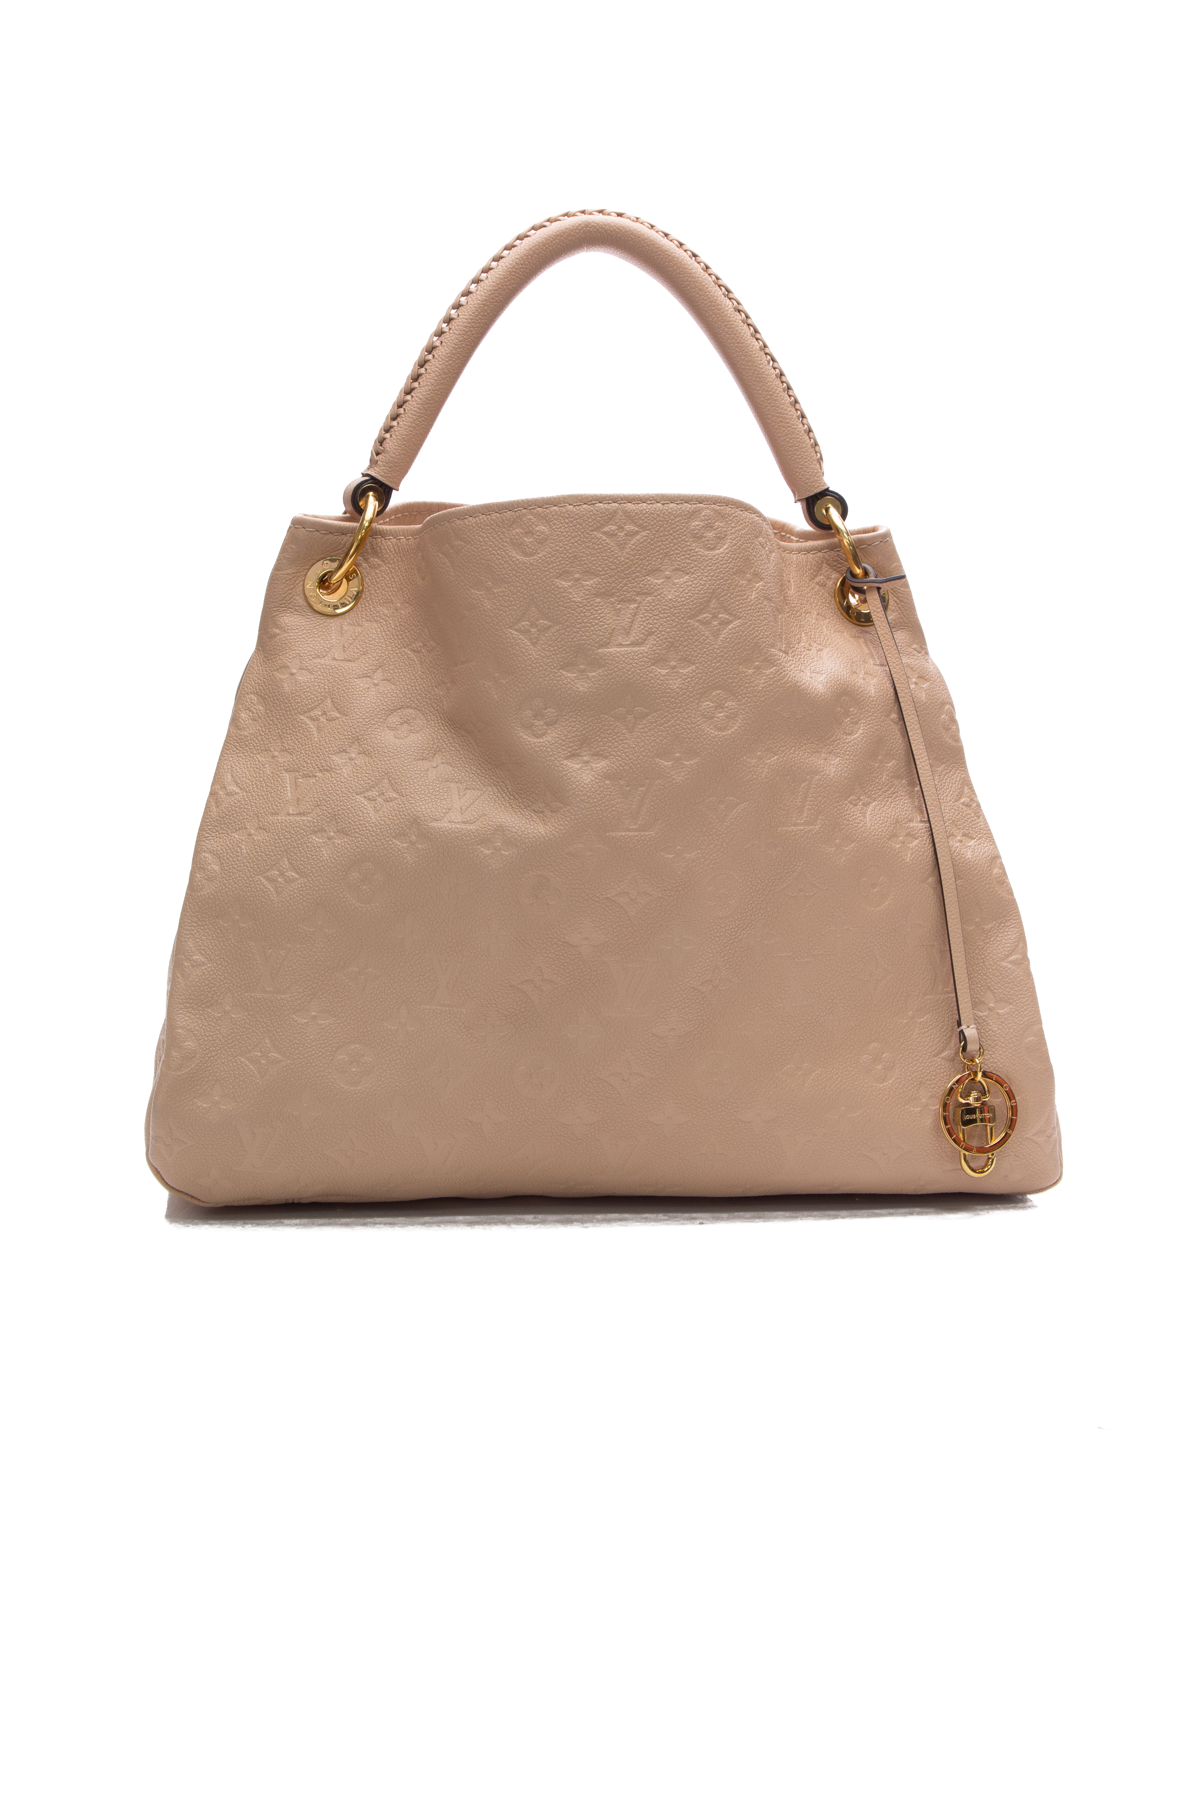 LV Louis Vuitton Artsy printed letters shopping bag handbag shoulder